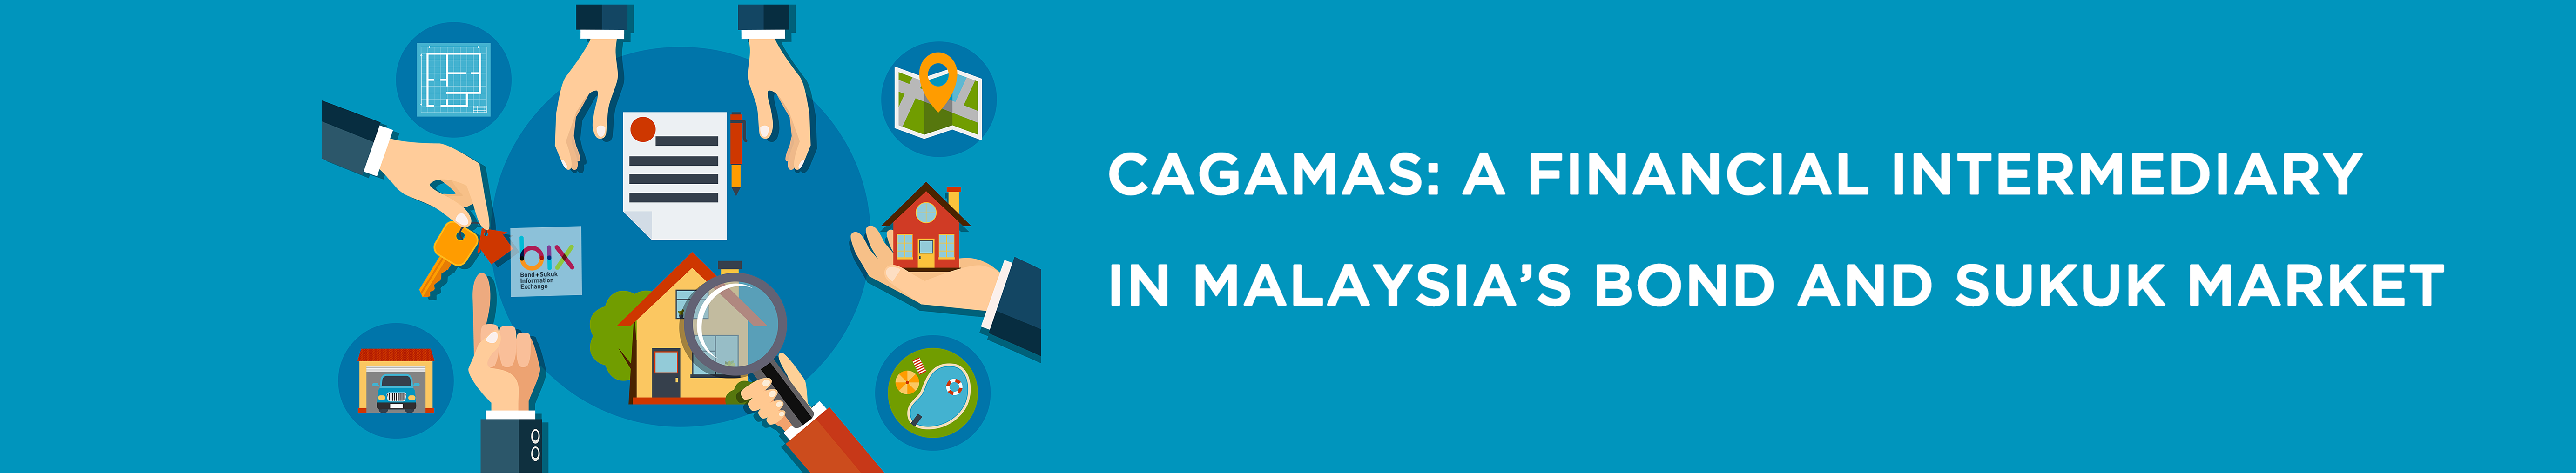 Cagamas: A Financial Intermediary in Malaysia’s Bond and Sukuk Market